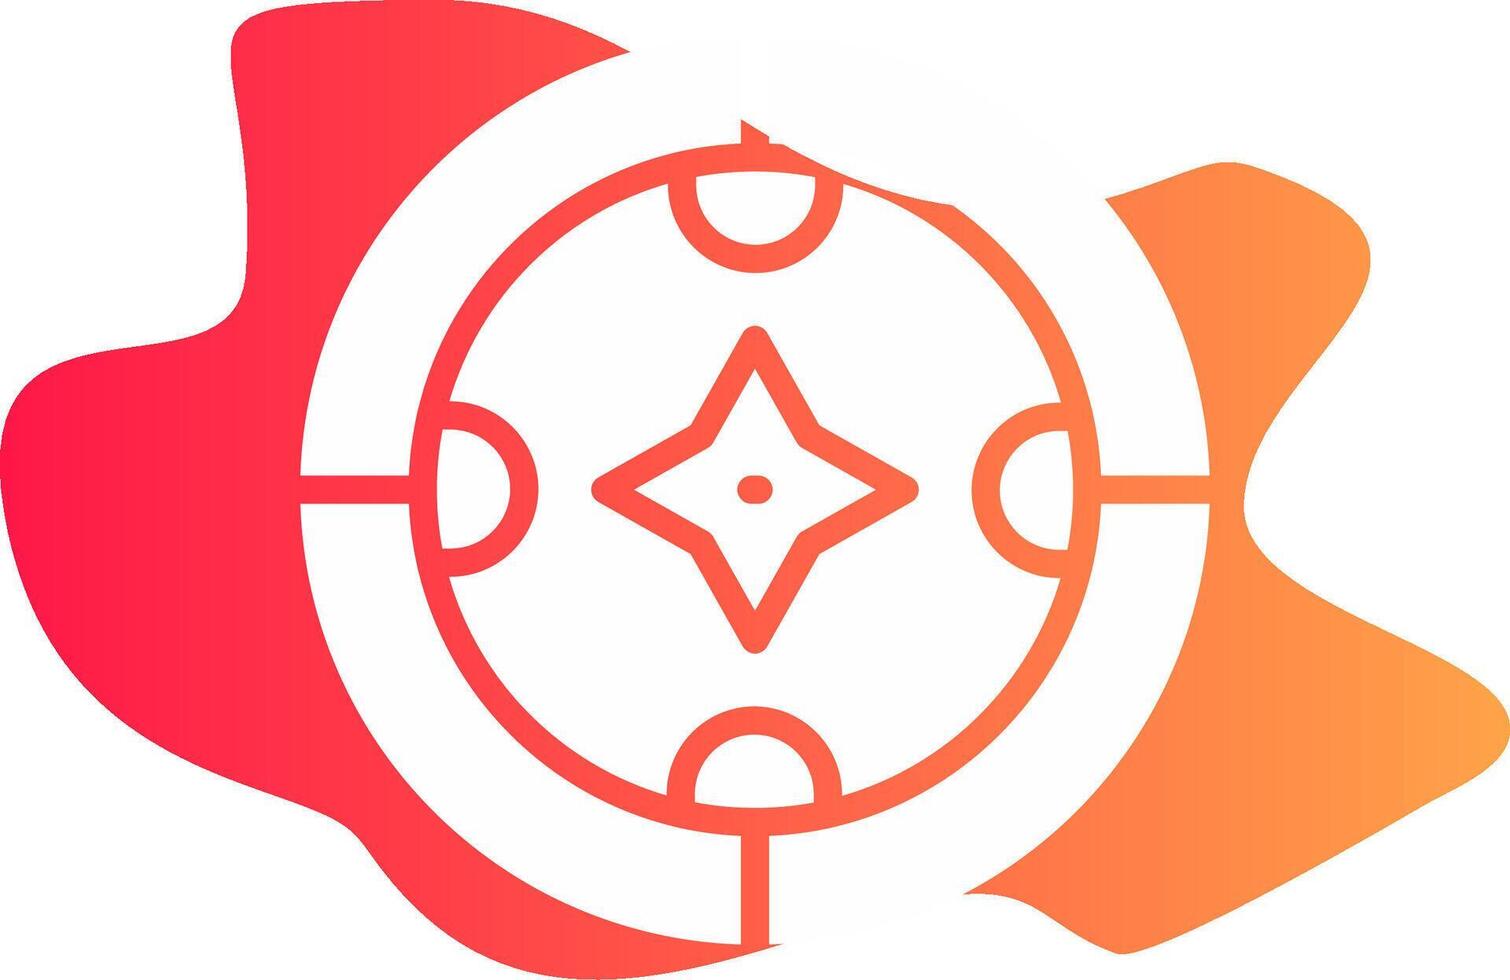 Kompass kreatives Icon-Design vektor